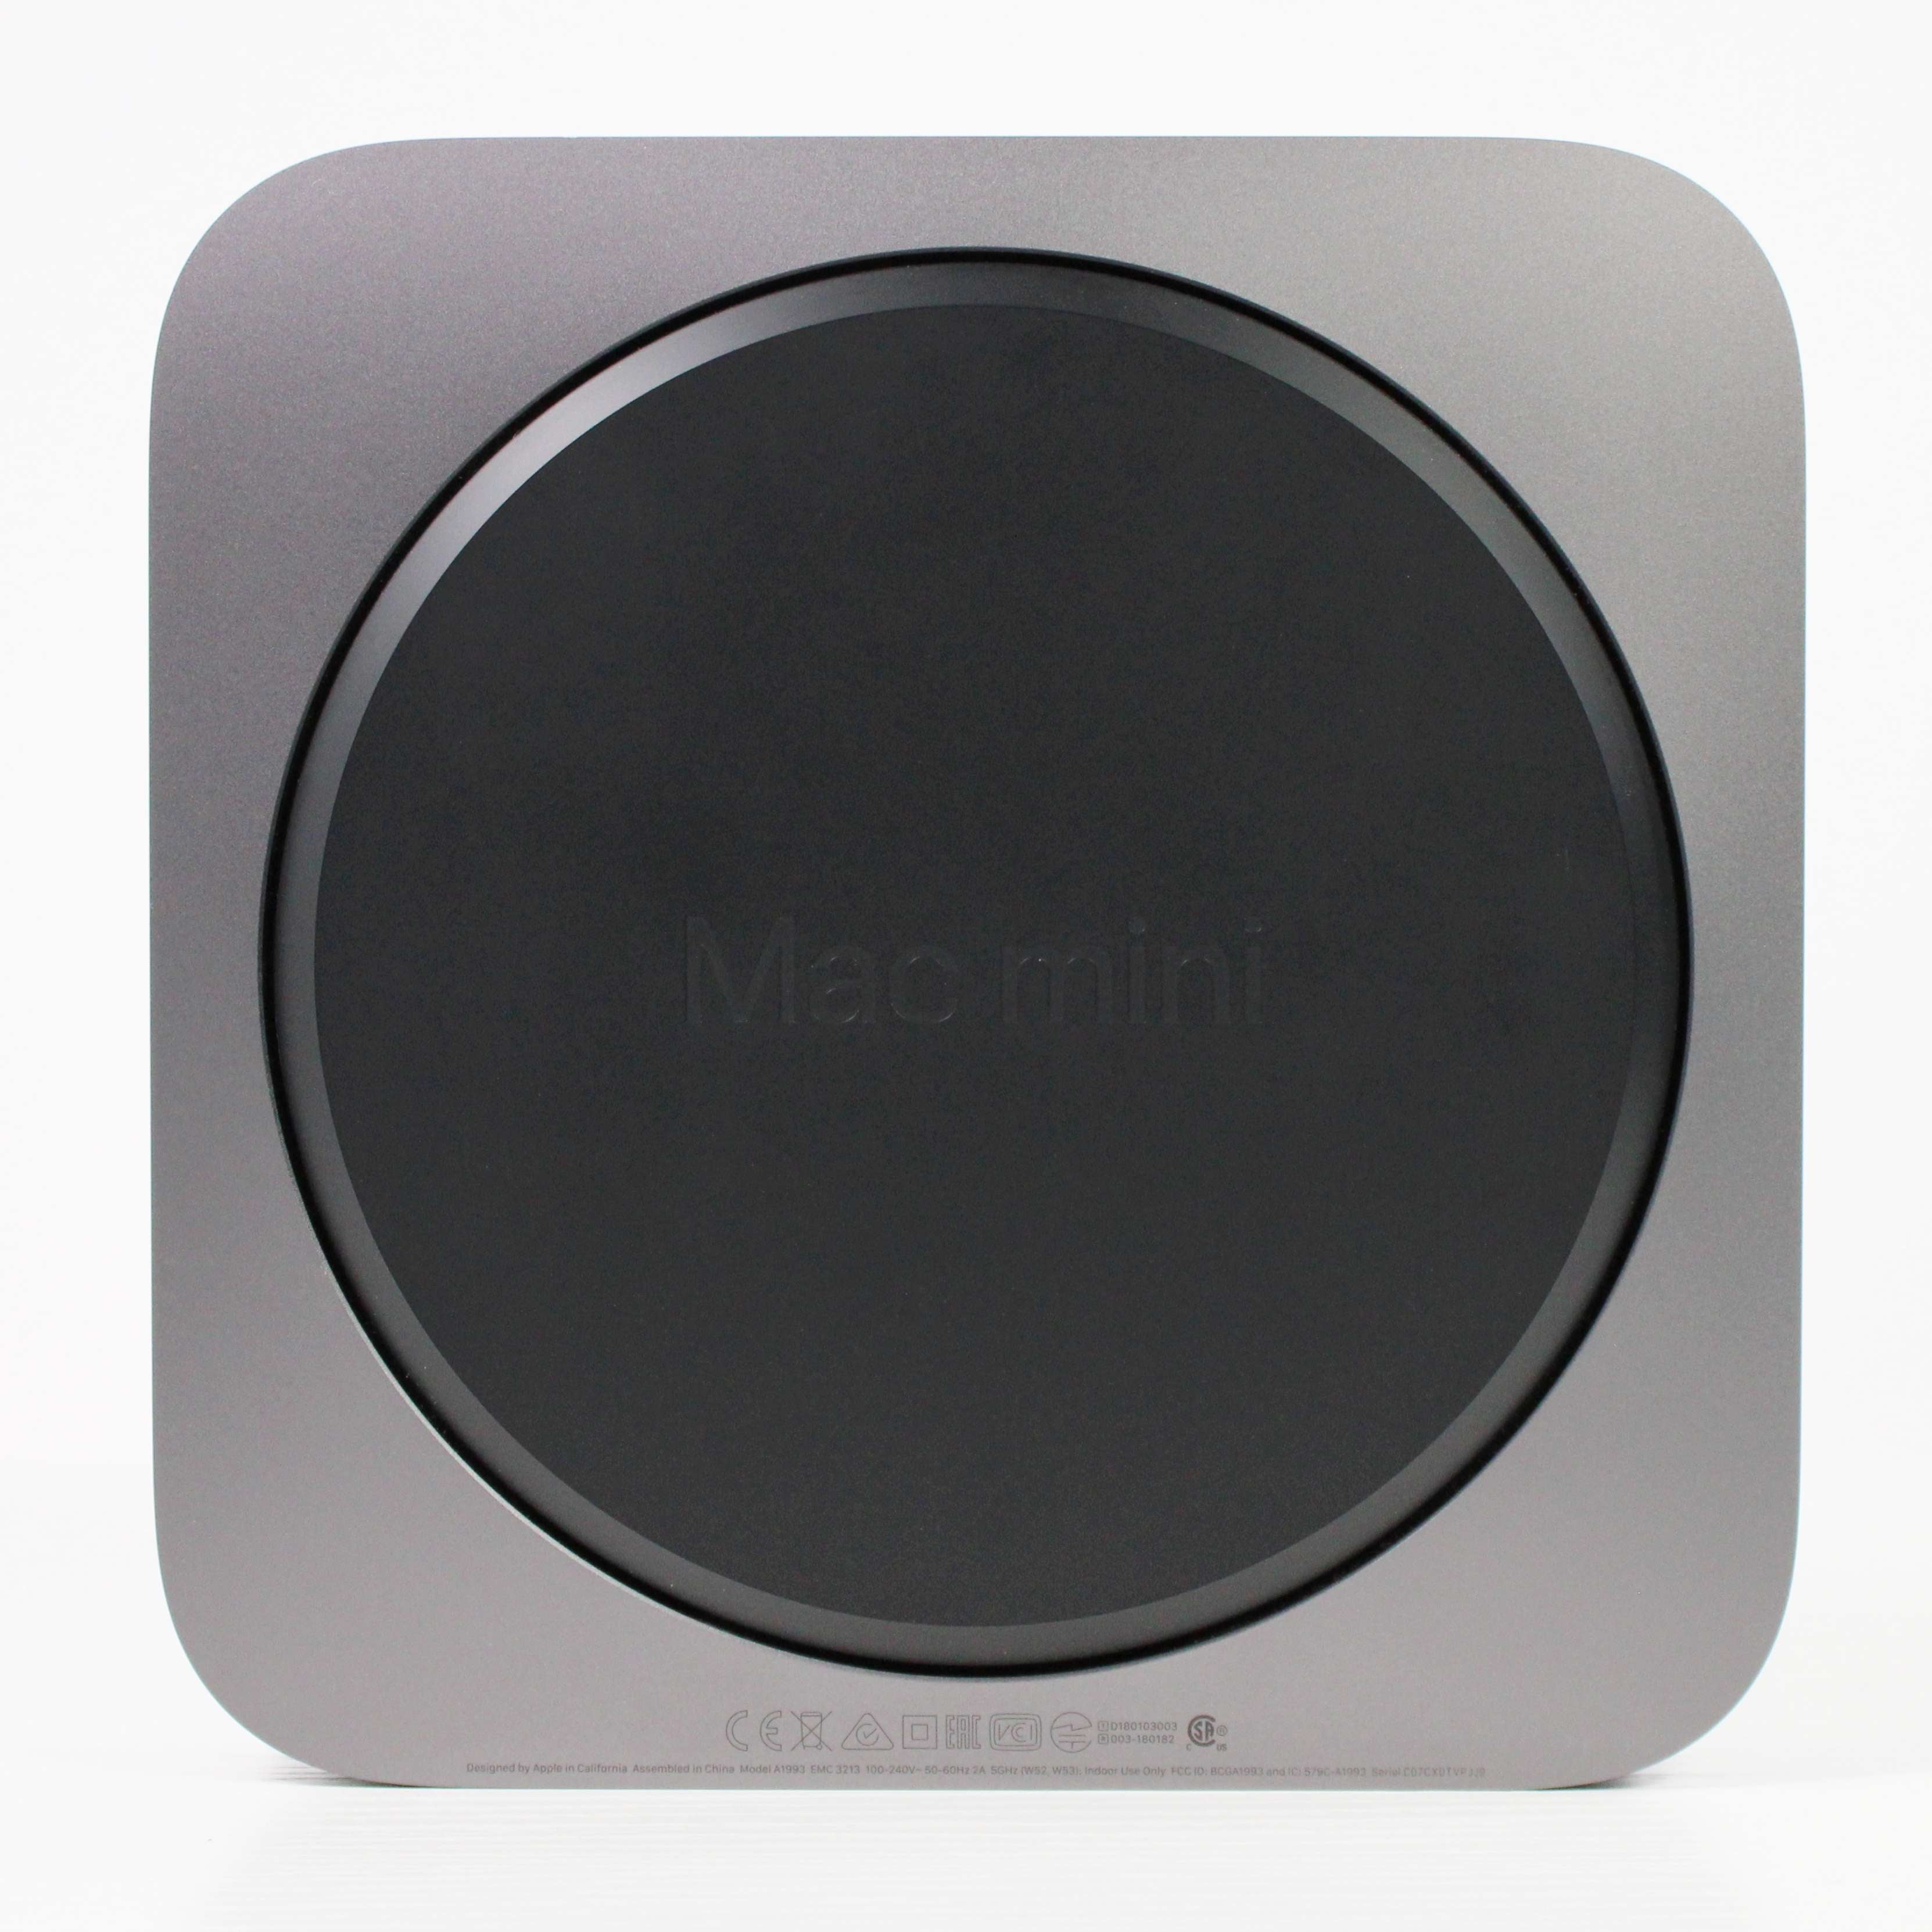 2018 Apple Mac Mini 3.0GHz Core i5-8500B Macmini8,1 MRTR2LL/A Space Grey  (Customizable)